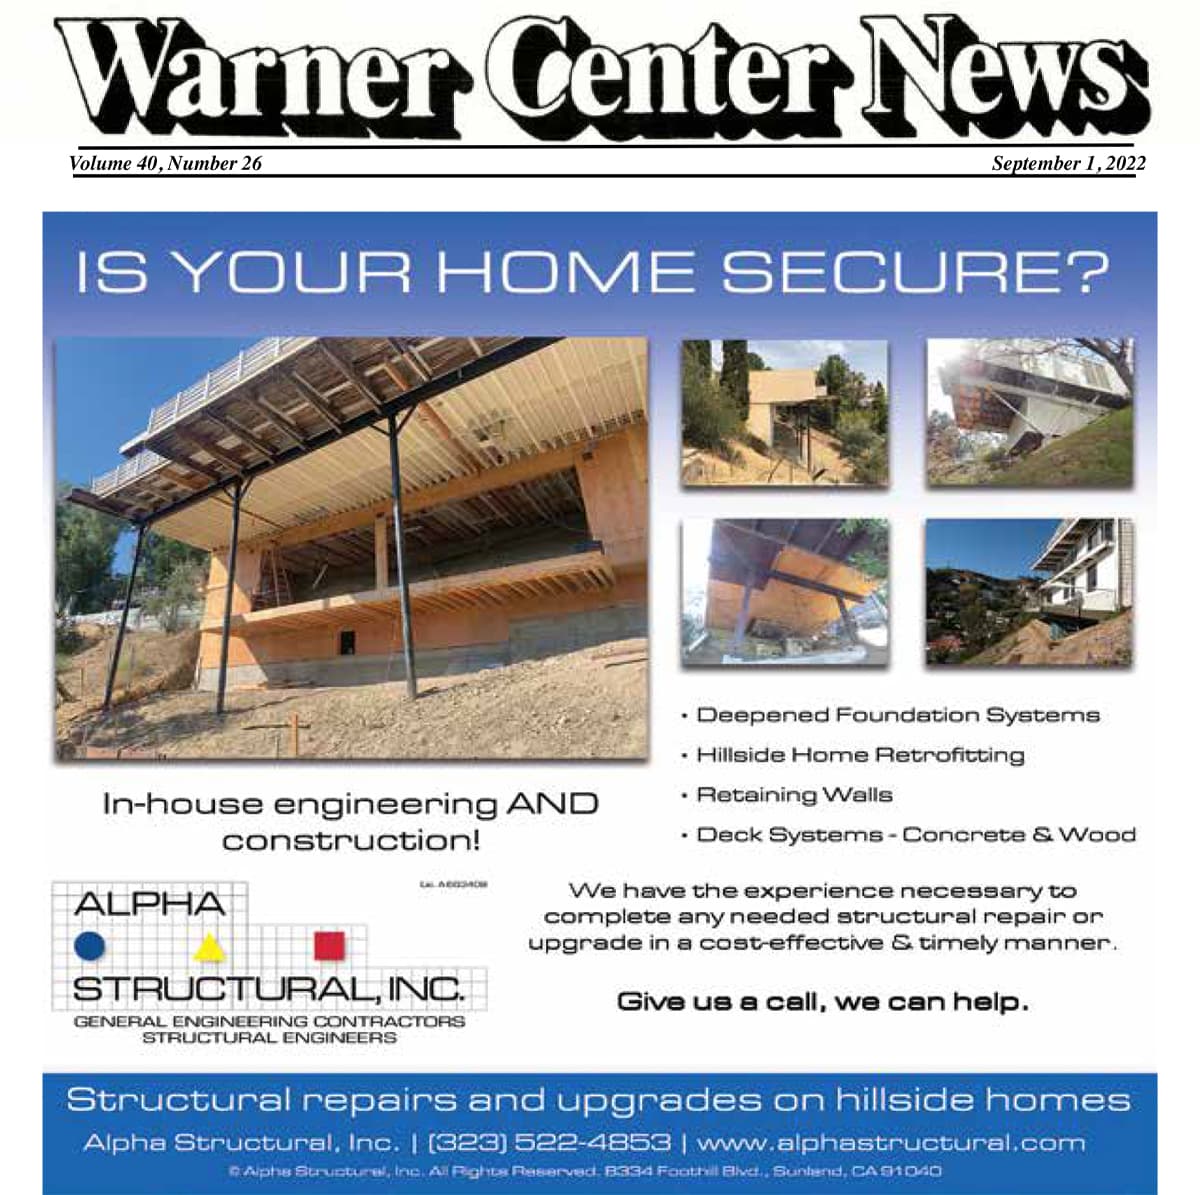 Alpha Structural, Inc Featured in Warner Center News